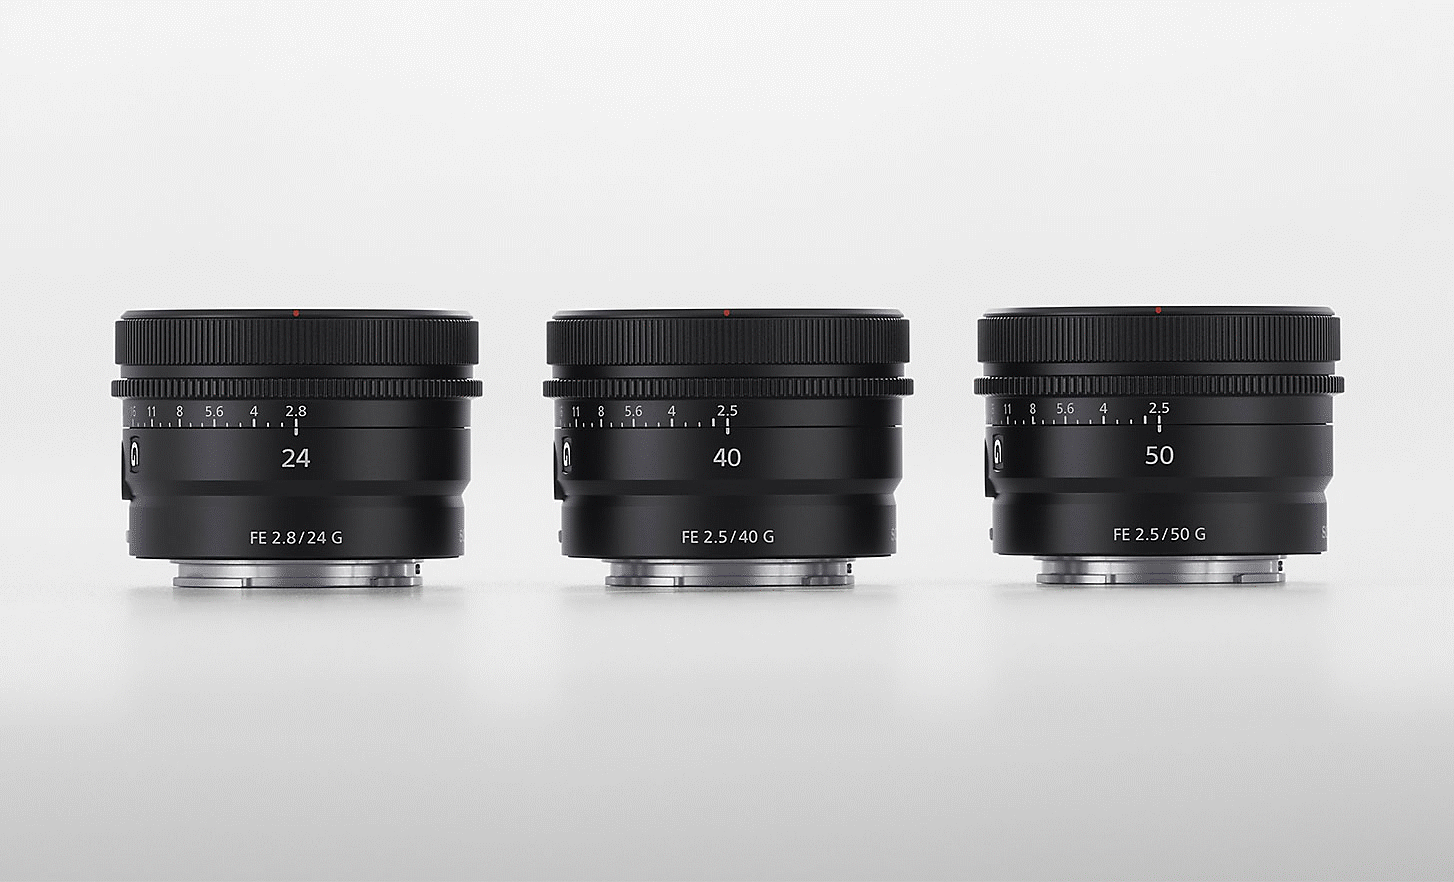 Imagen del producto que muestra tres lentes casi idénticas